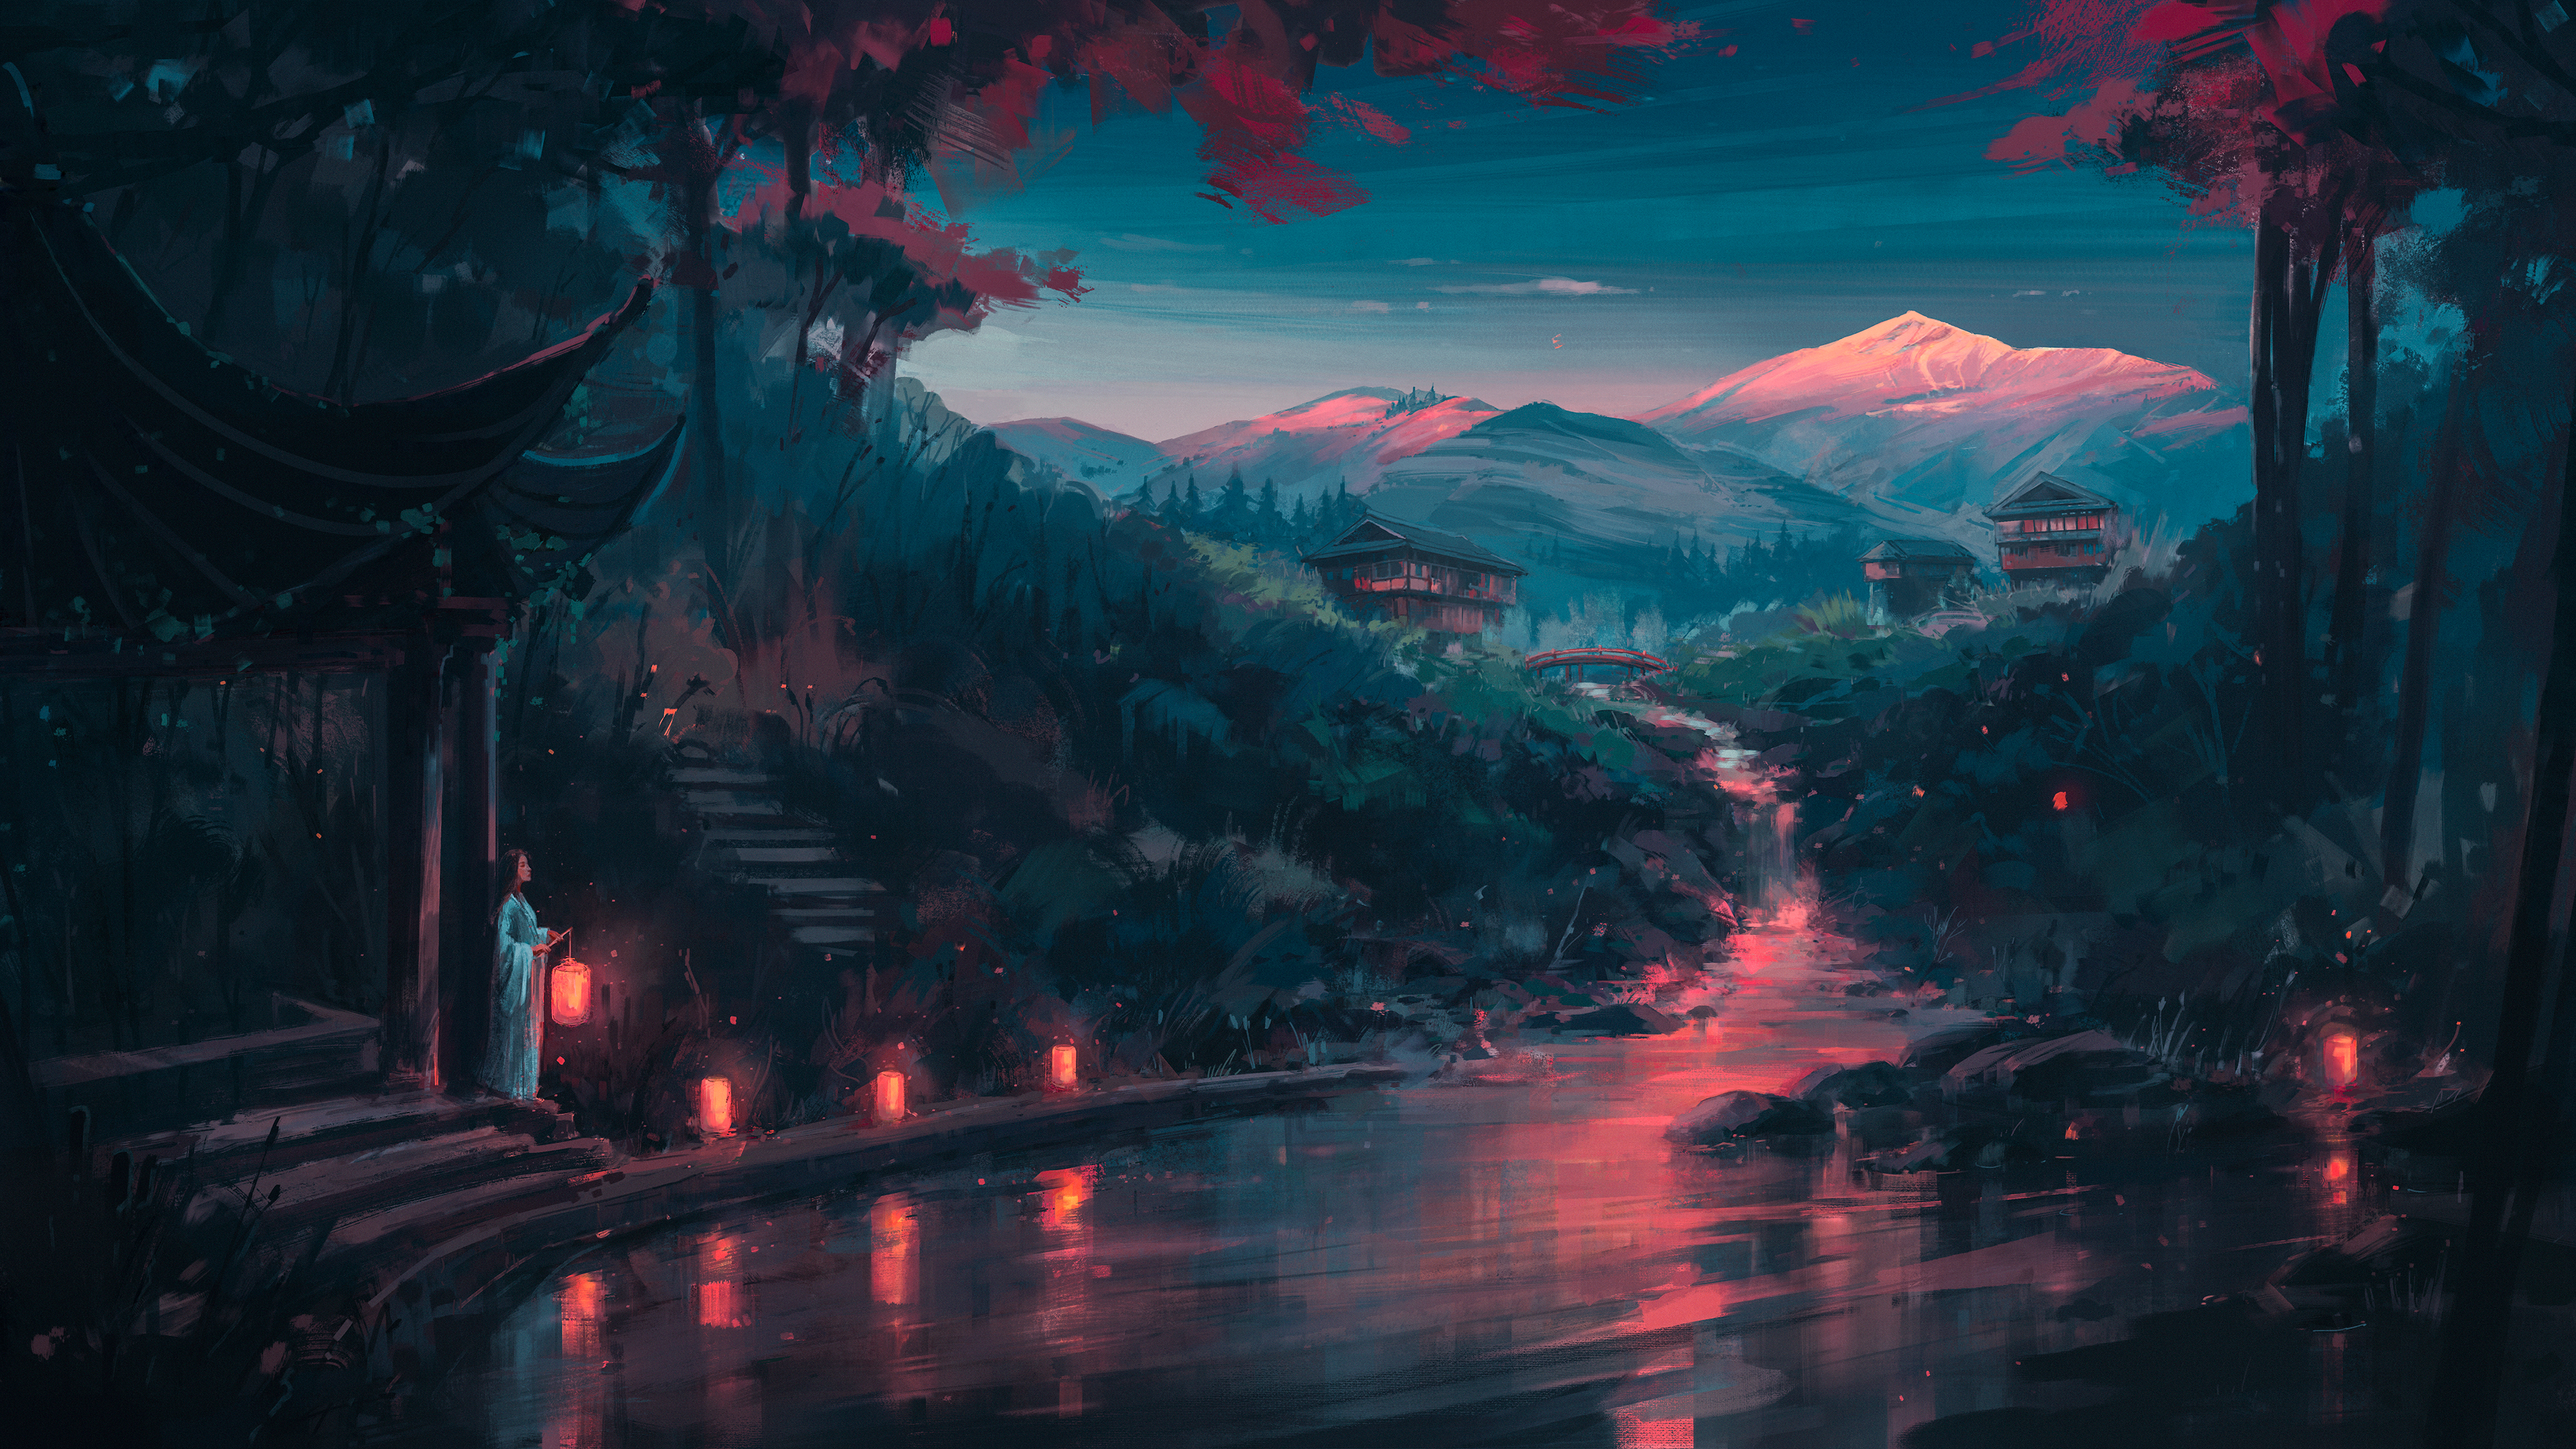 Aenami Digital Art Artwork Illustration Painting Landscape Nature Mountains River Reflection Forest  3840x2160